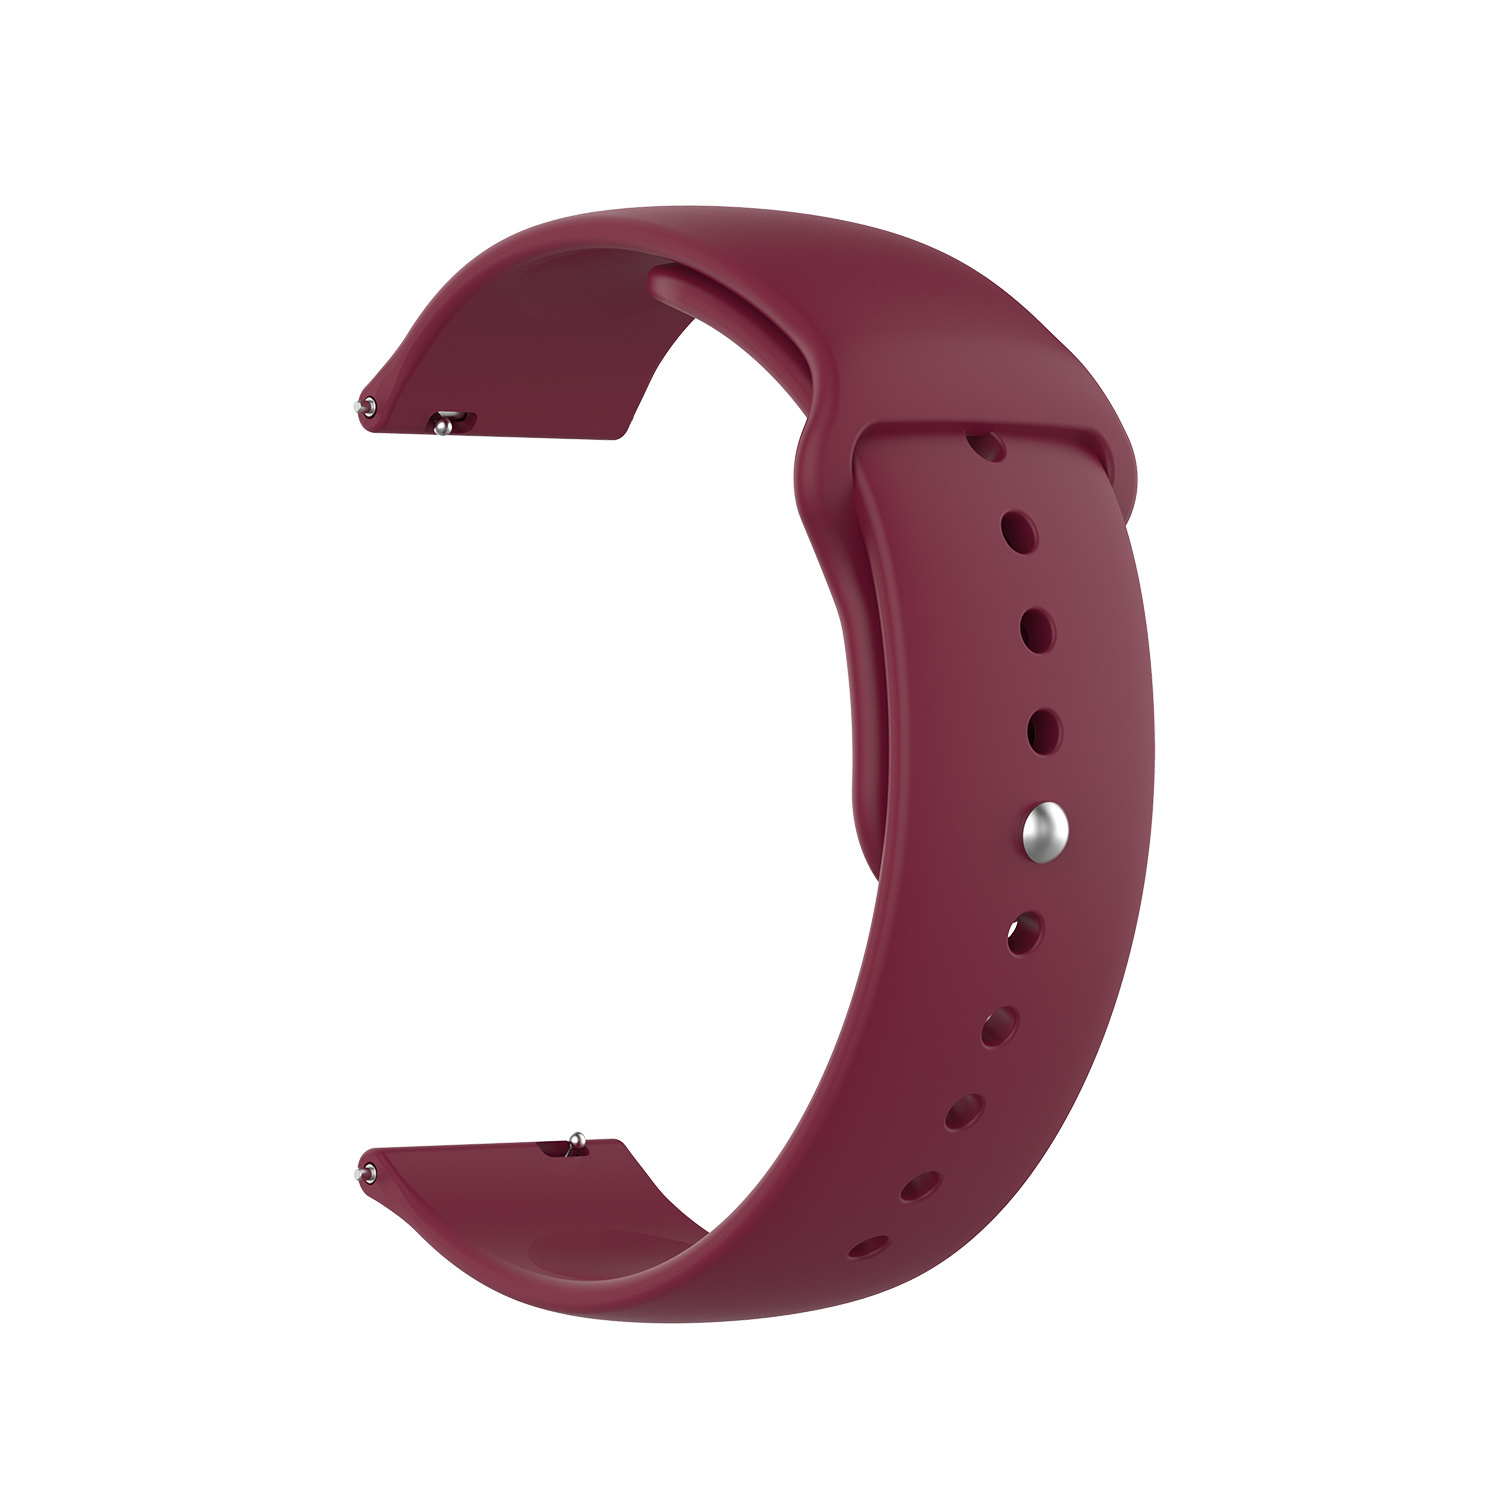 Cinturino sport in silicone per Huawei Watch GT - rosso vino